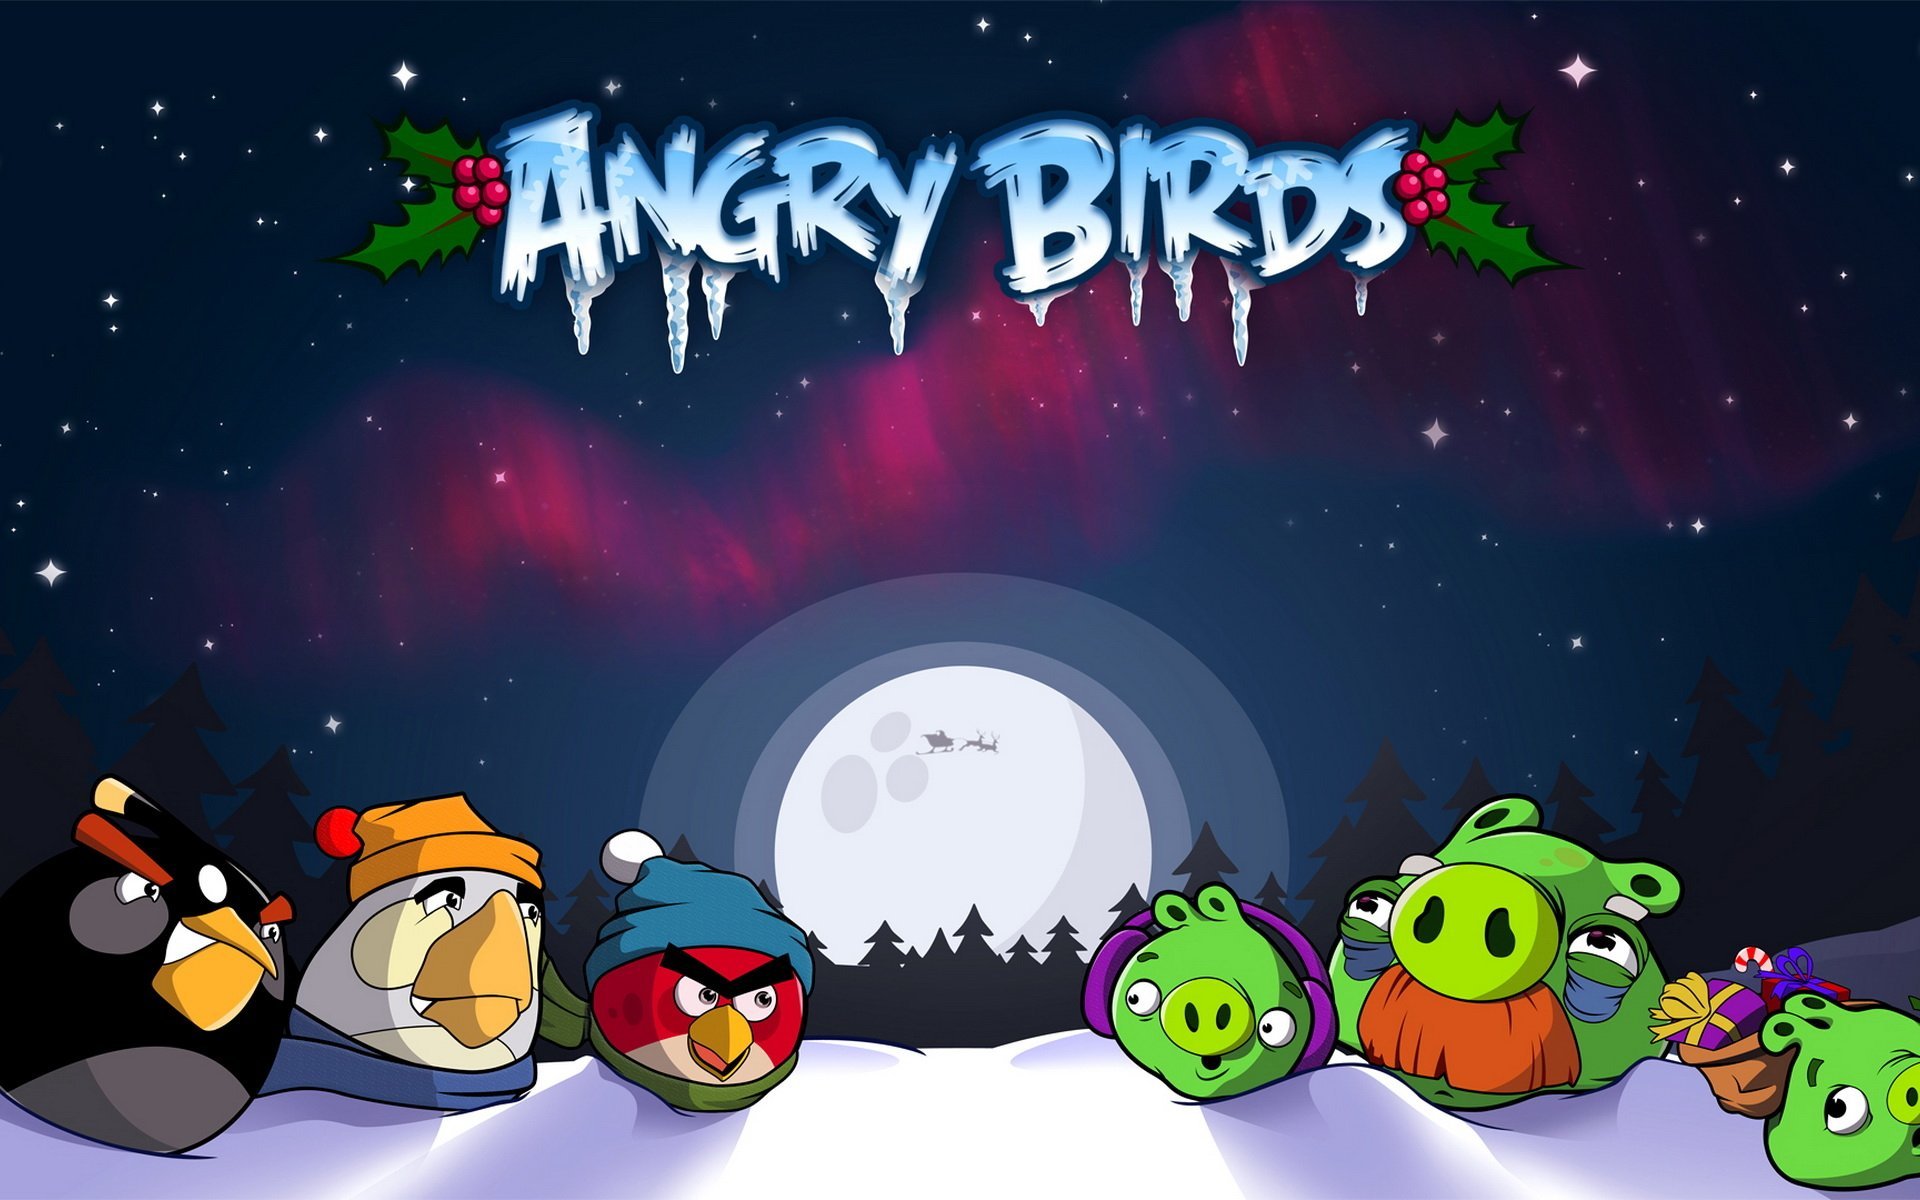 Angry birds 1.5 2. Энгри бёрдз злые птички. Энгри бердз Сизонс. Игра Angry Birds Seasons. Игра Angry Birds Seasons South America.